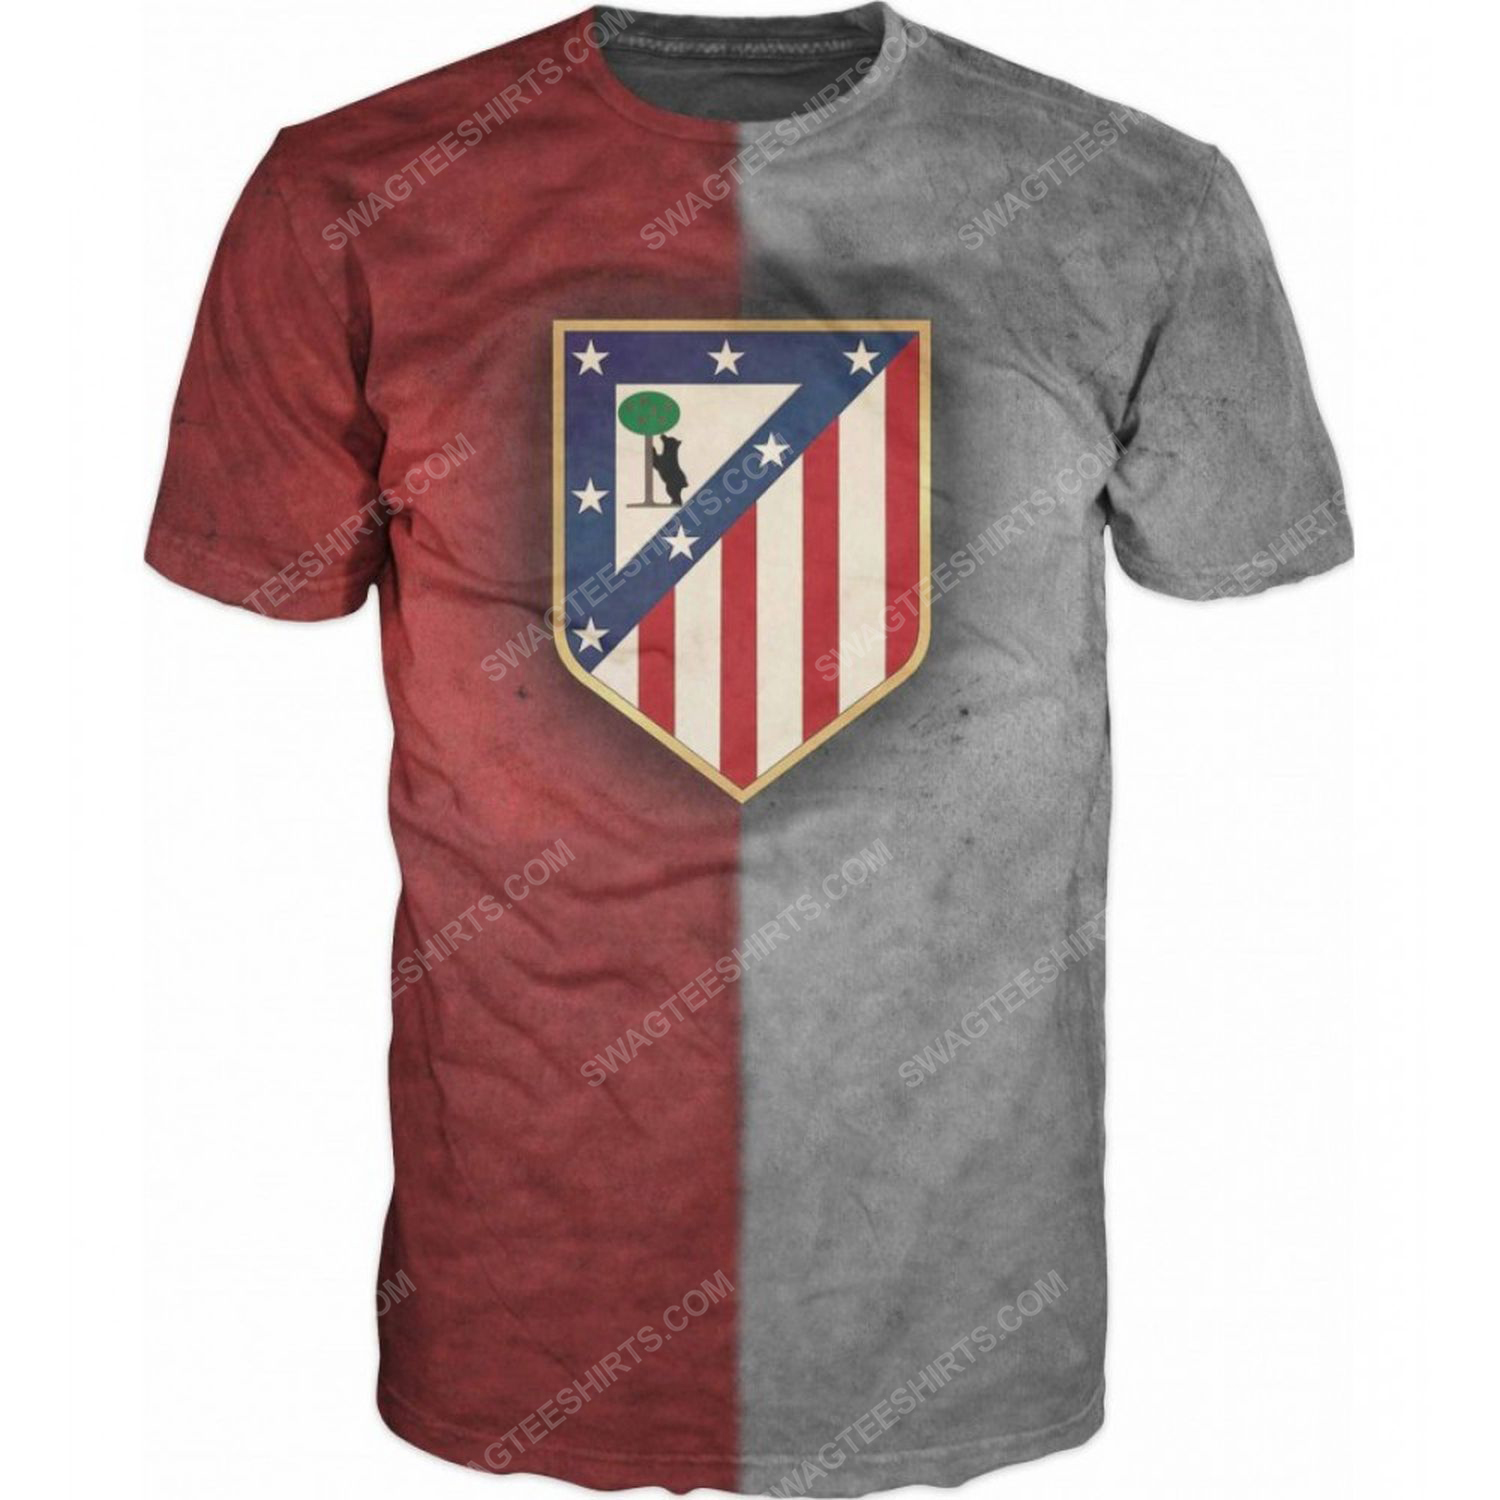 Atletico madrid football club full printing shirt - front